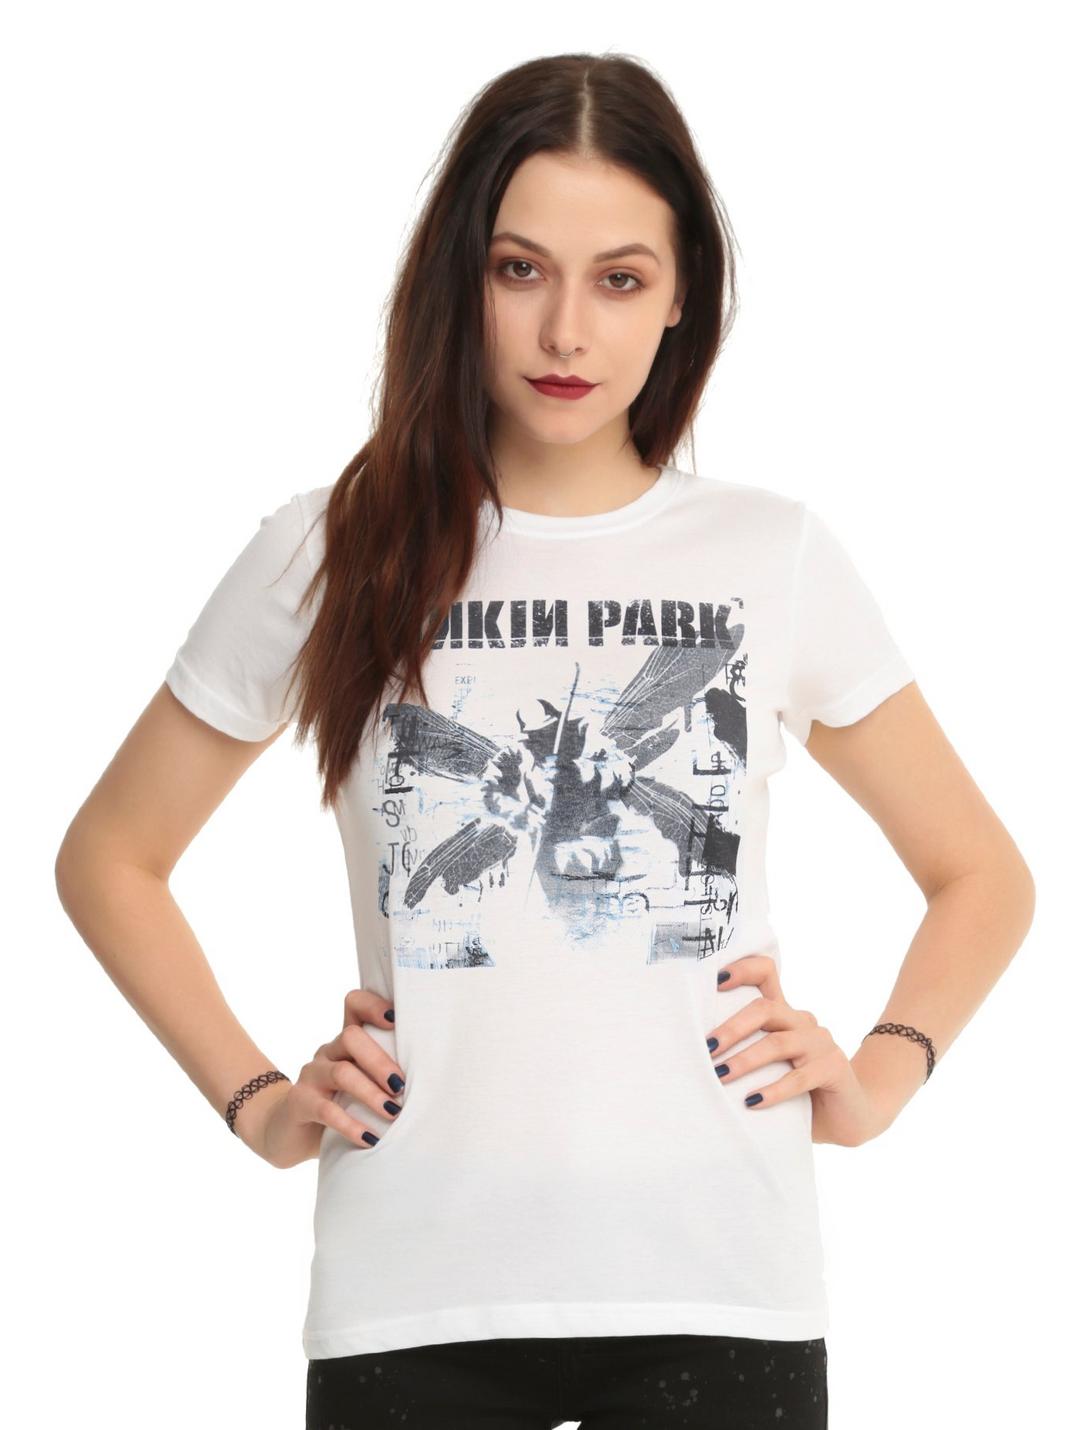 Linkin Park Hybrid Theory Girls T-Shirt, WHITE, hi-res